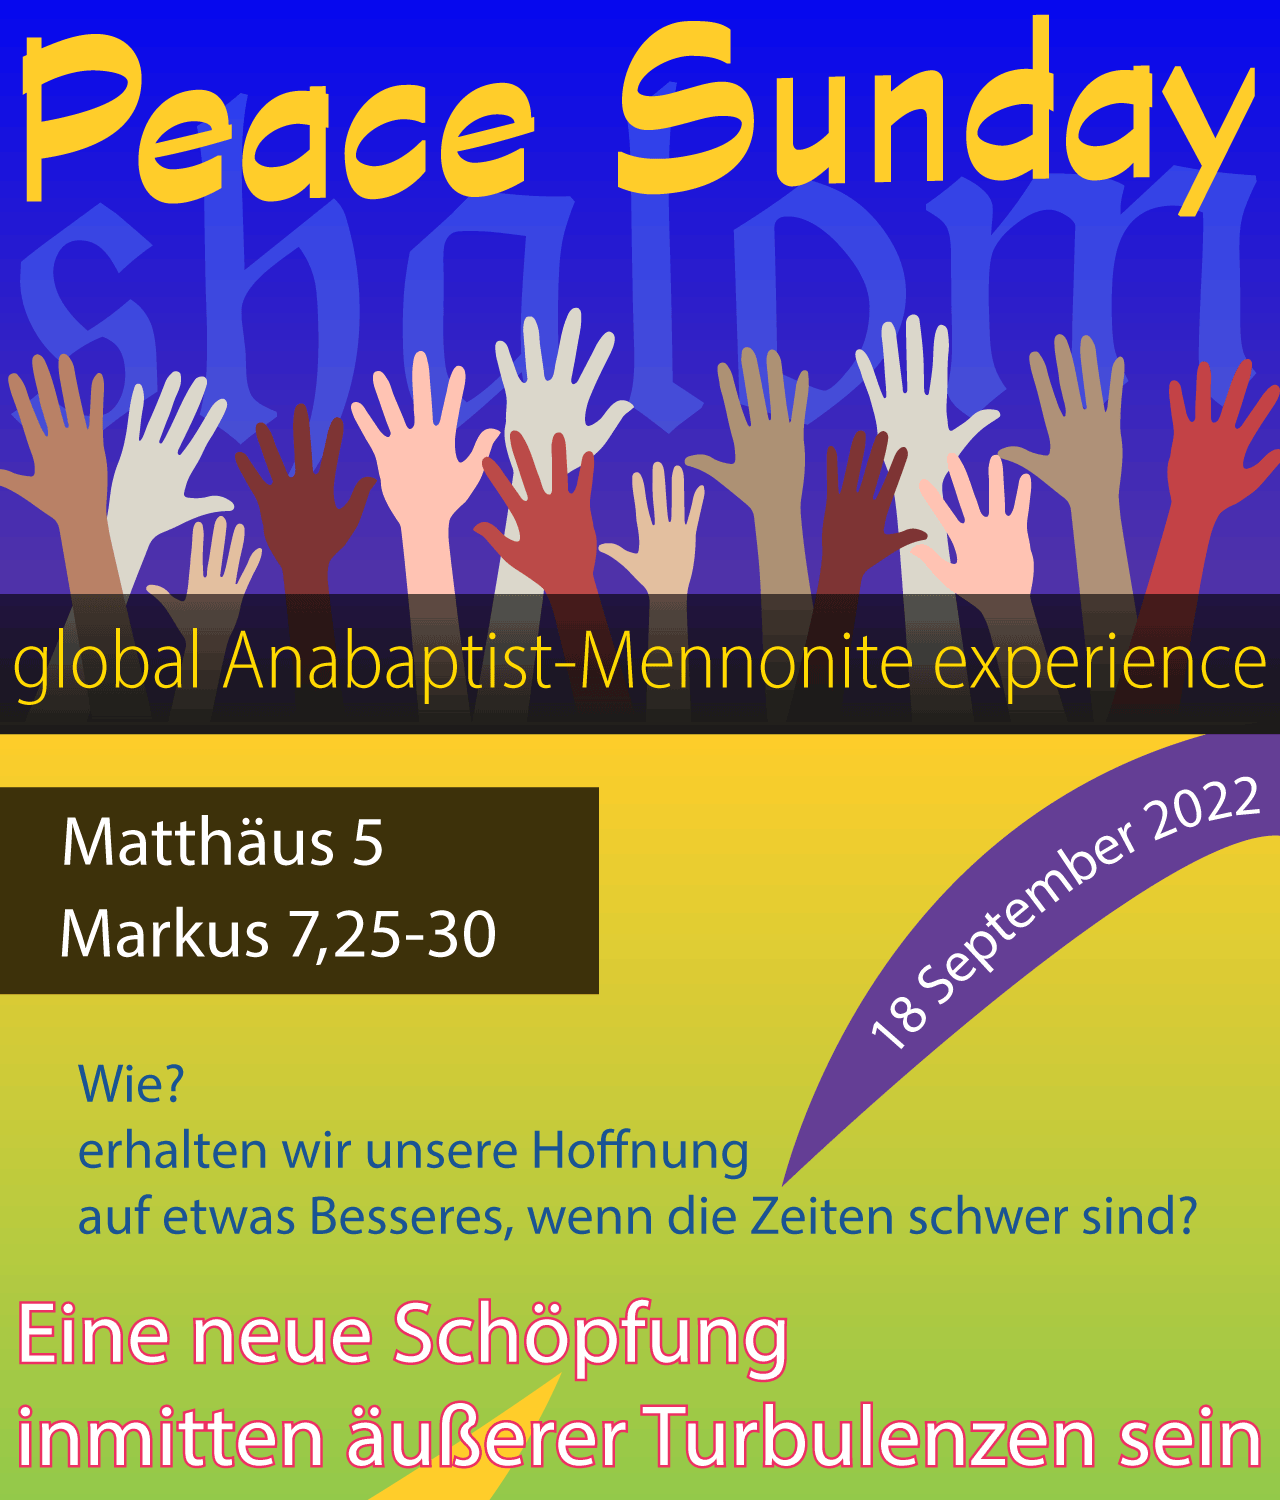 Peace Sunday 2022, Friedenssonntag 2022, Mennonite World Conference.